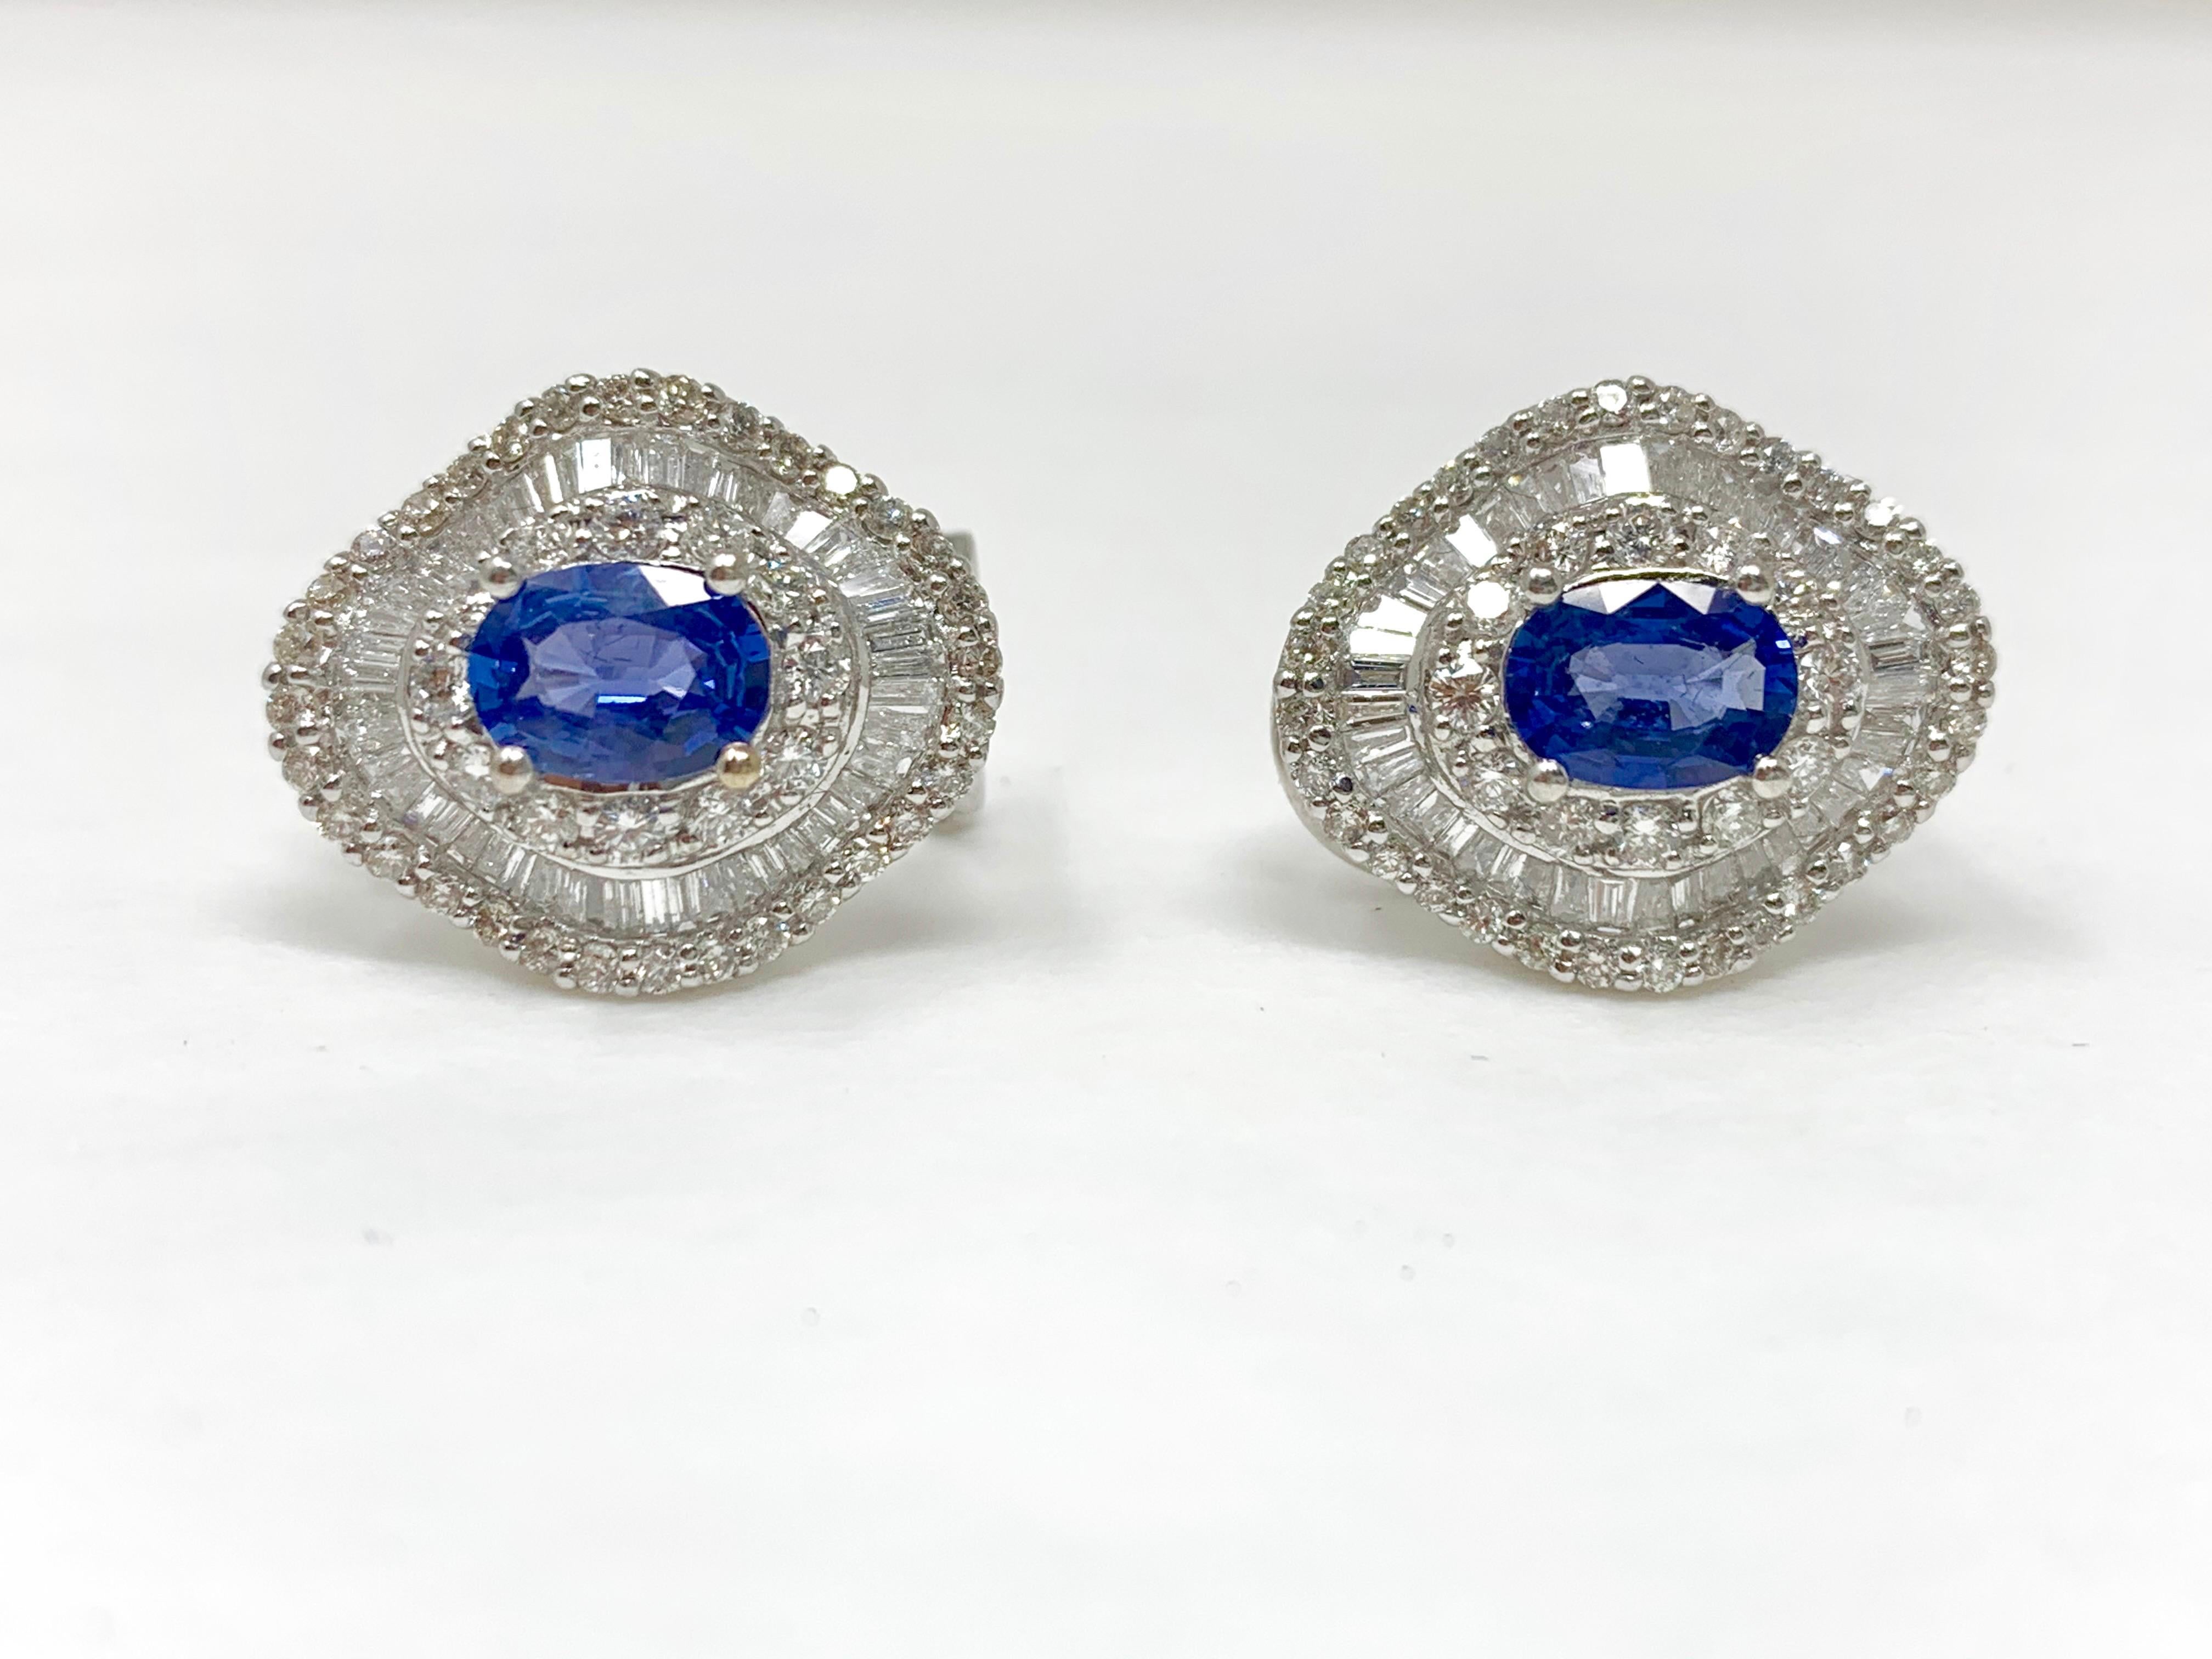 Oval Cut Blue Sapphire and Diamond Stud Earrings in 18 Karat White Gold